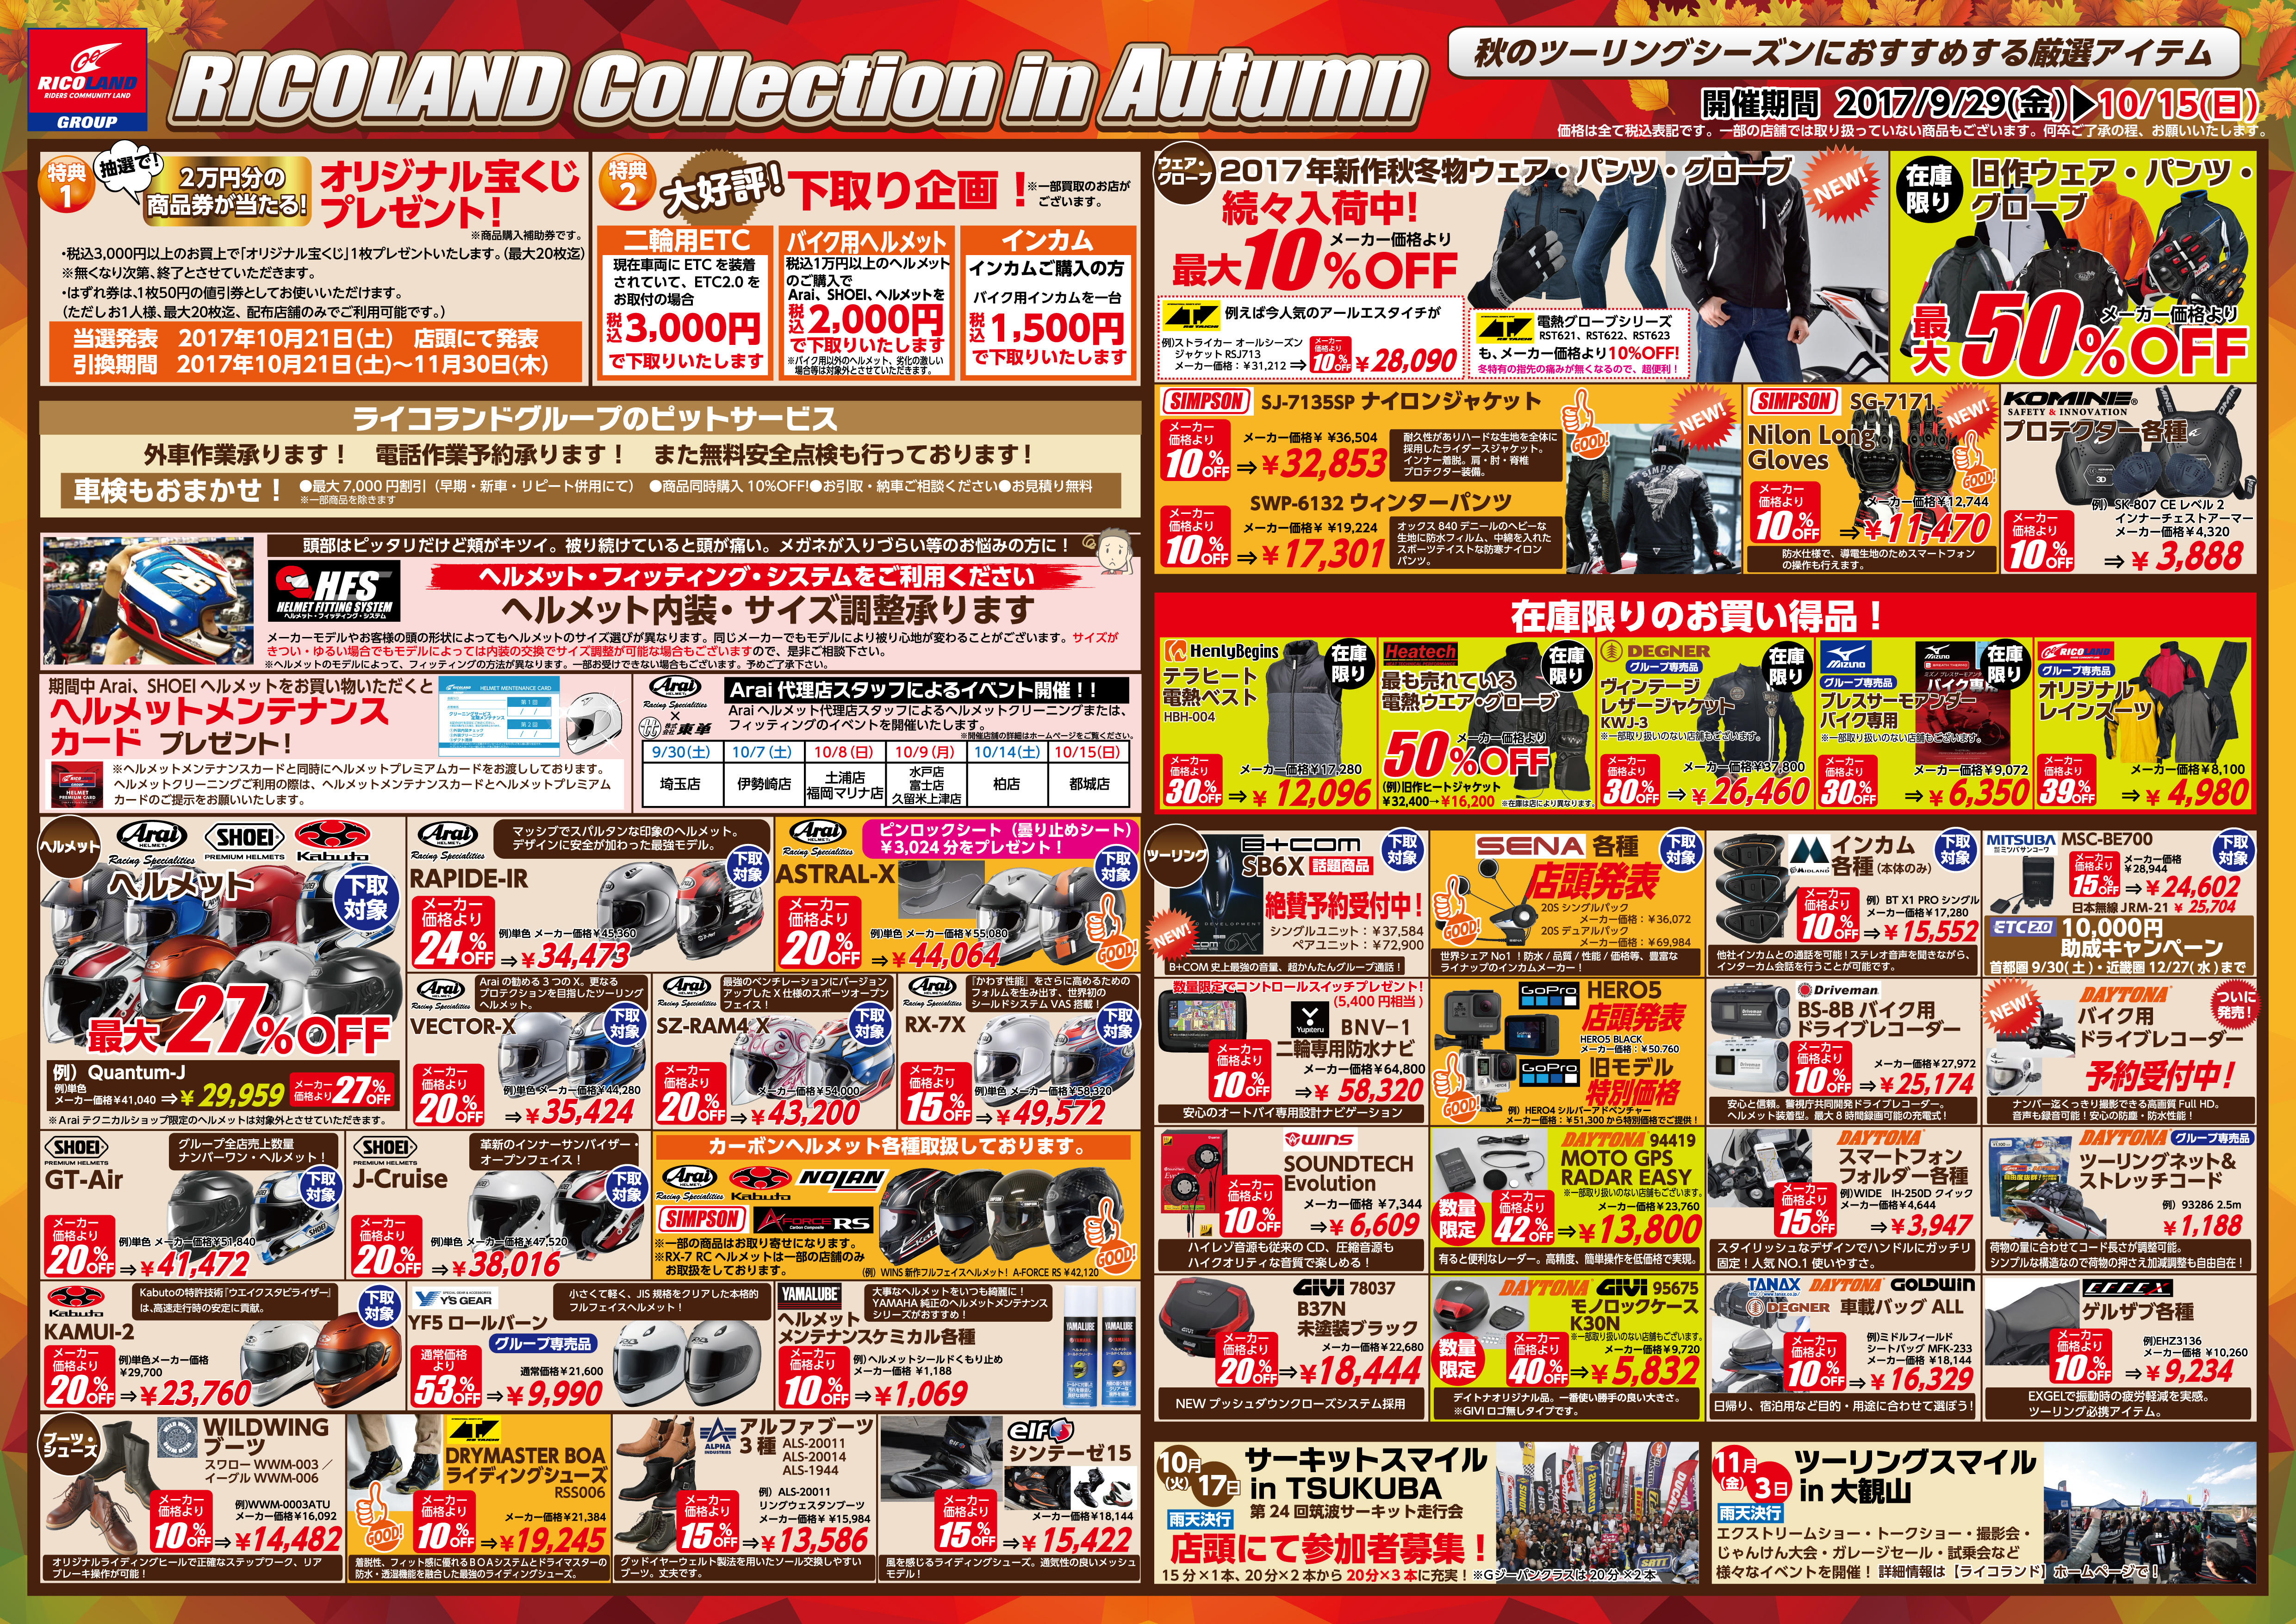 http://www.ricoland.co.jp/information/assets/img/outline_chirashi_omote.jpg